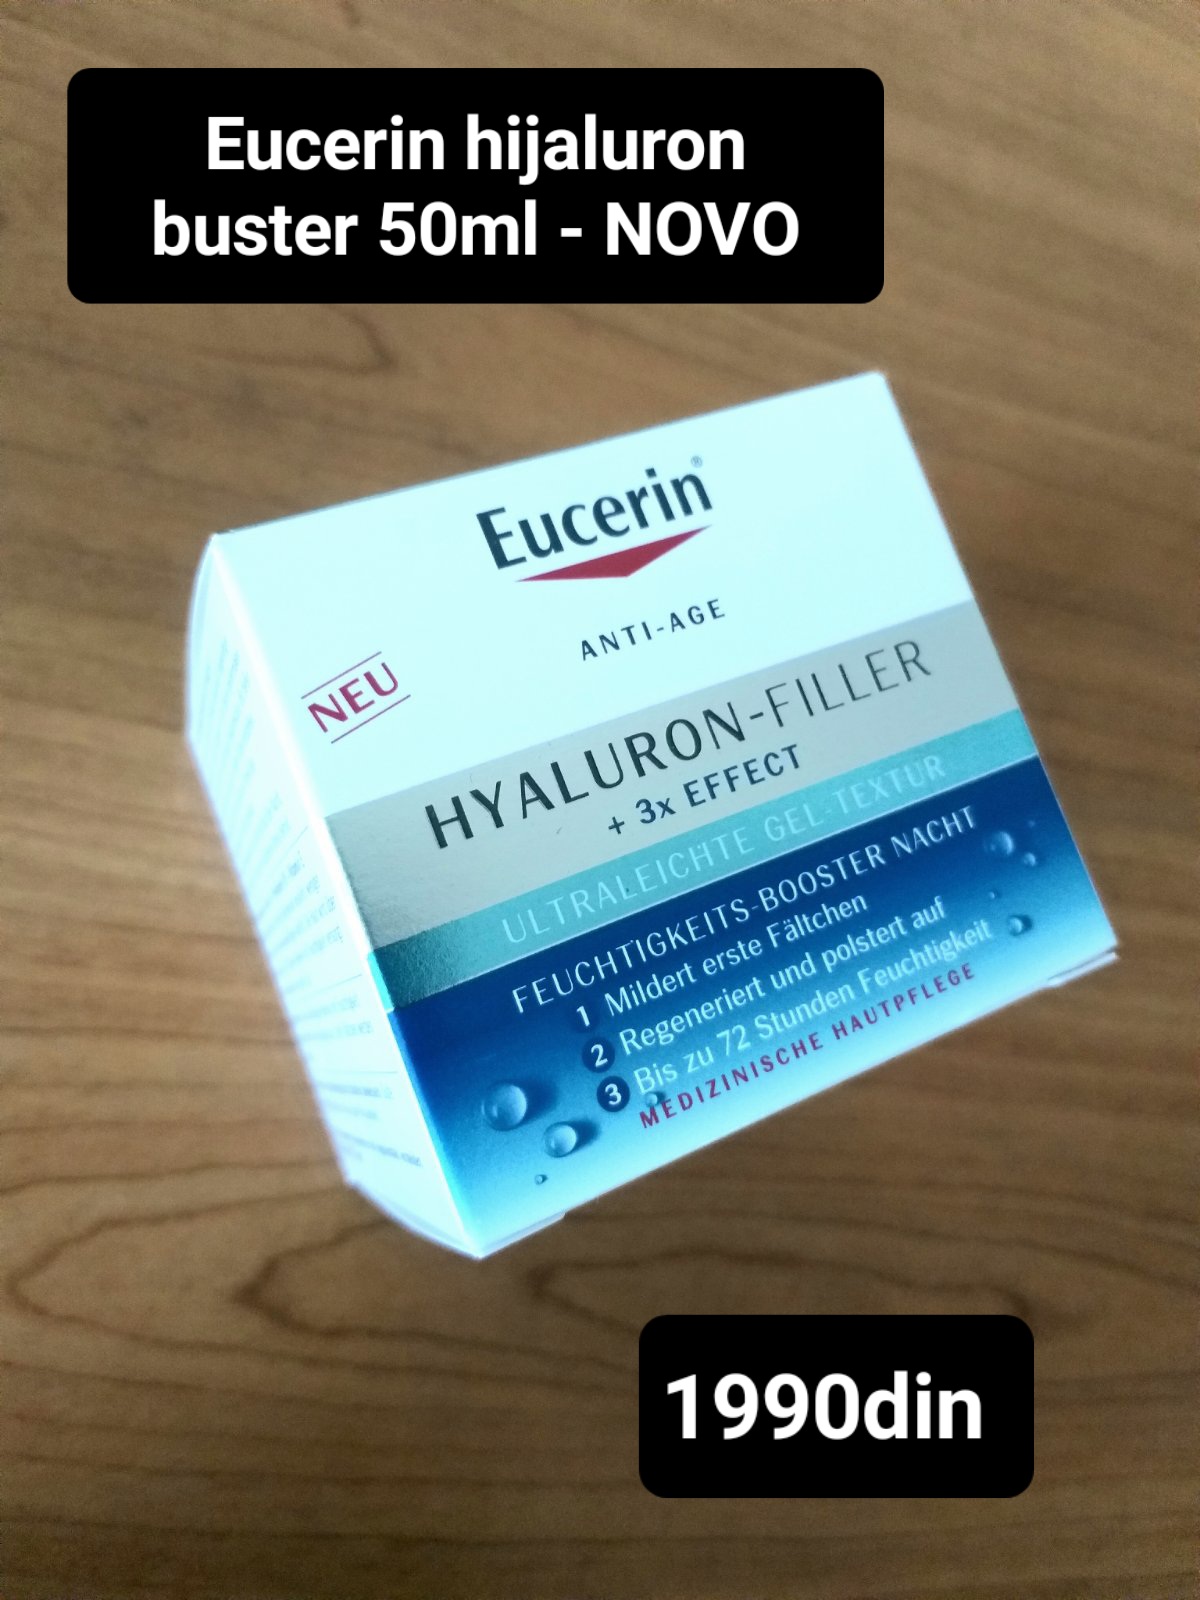 Eucerin Hyaluron Filler 3x noćni hidro buster 50ml NOVO